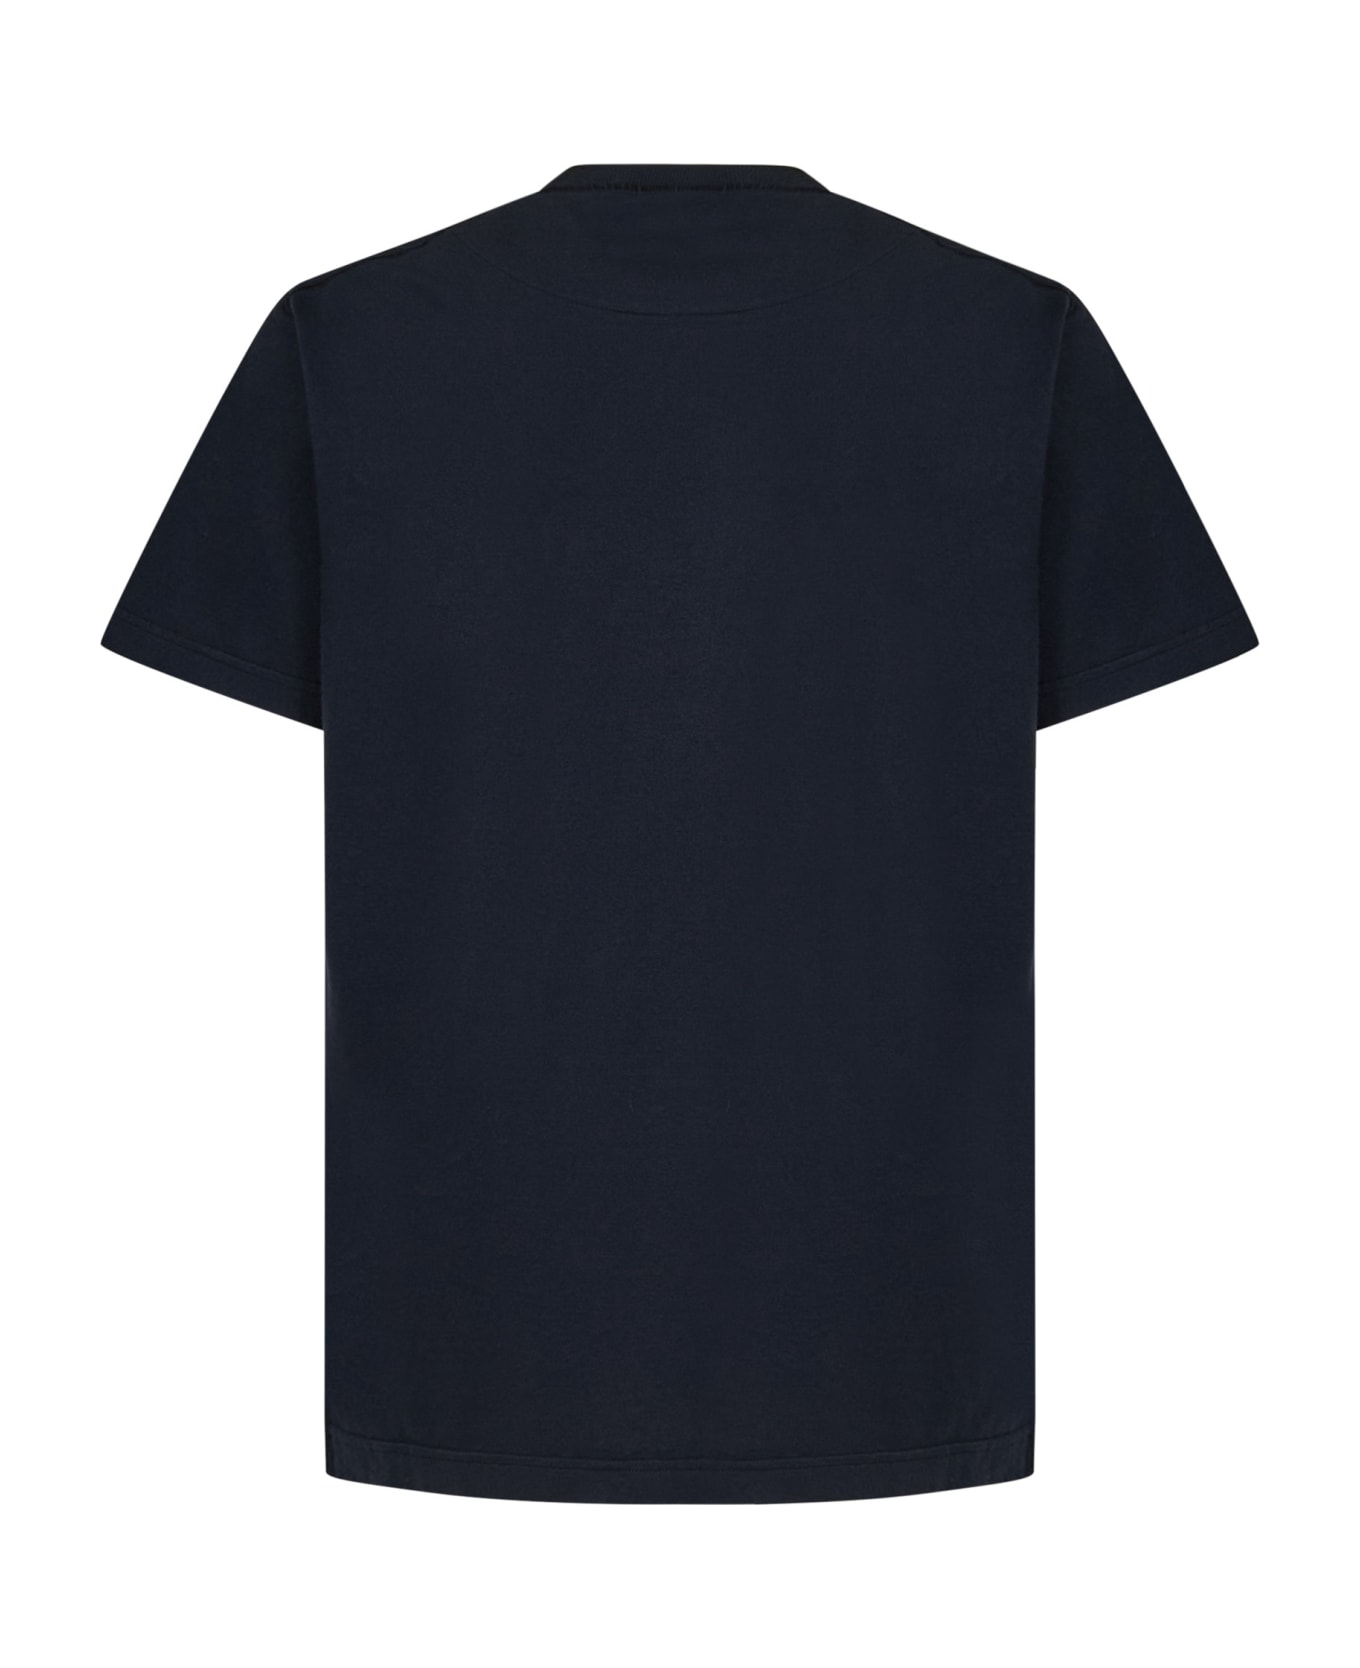 Stone Island T-shirt - Blue